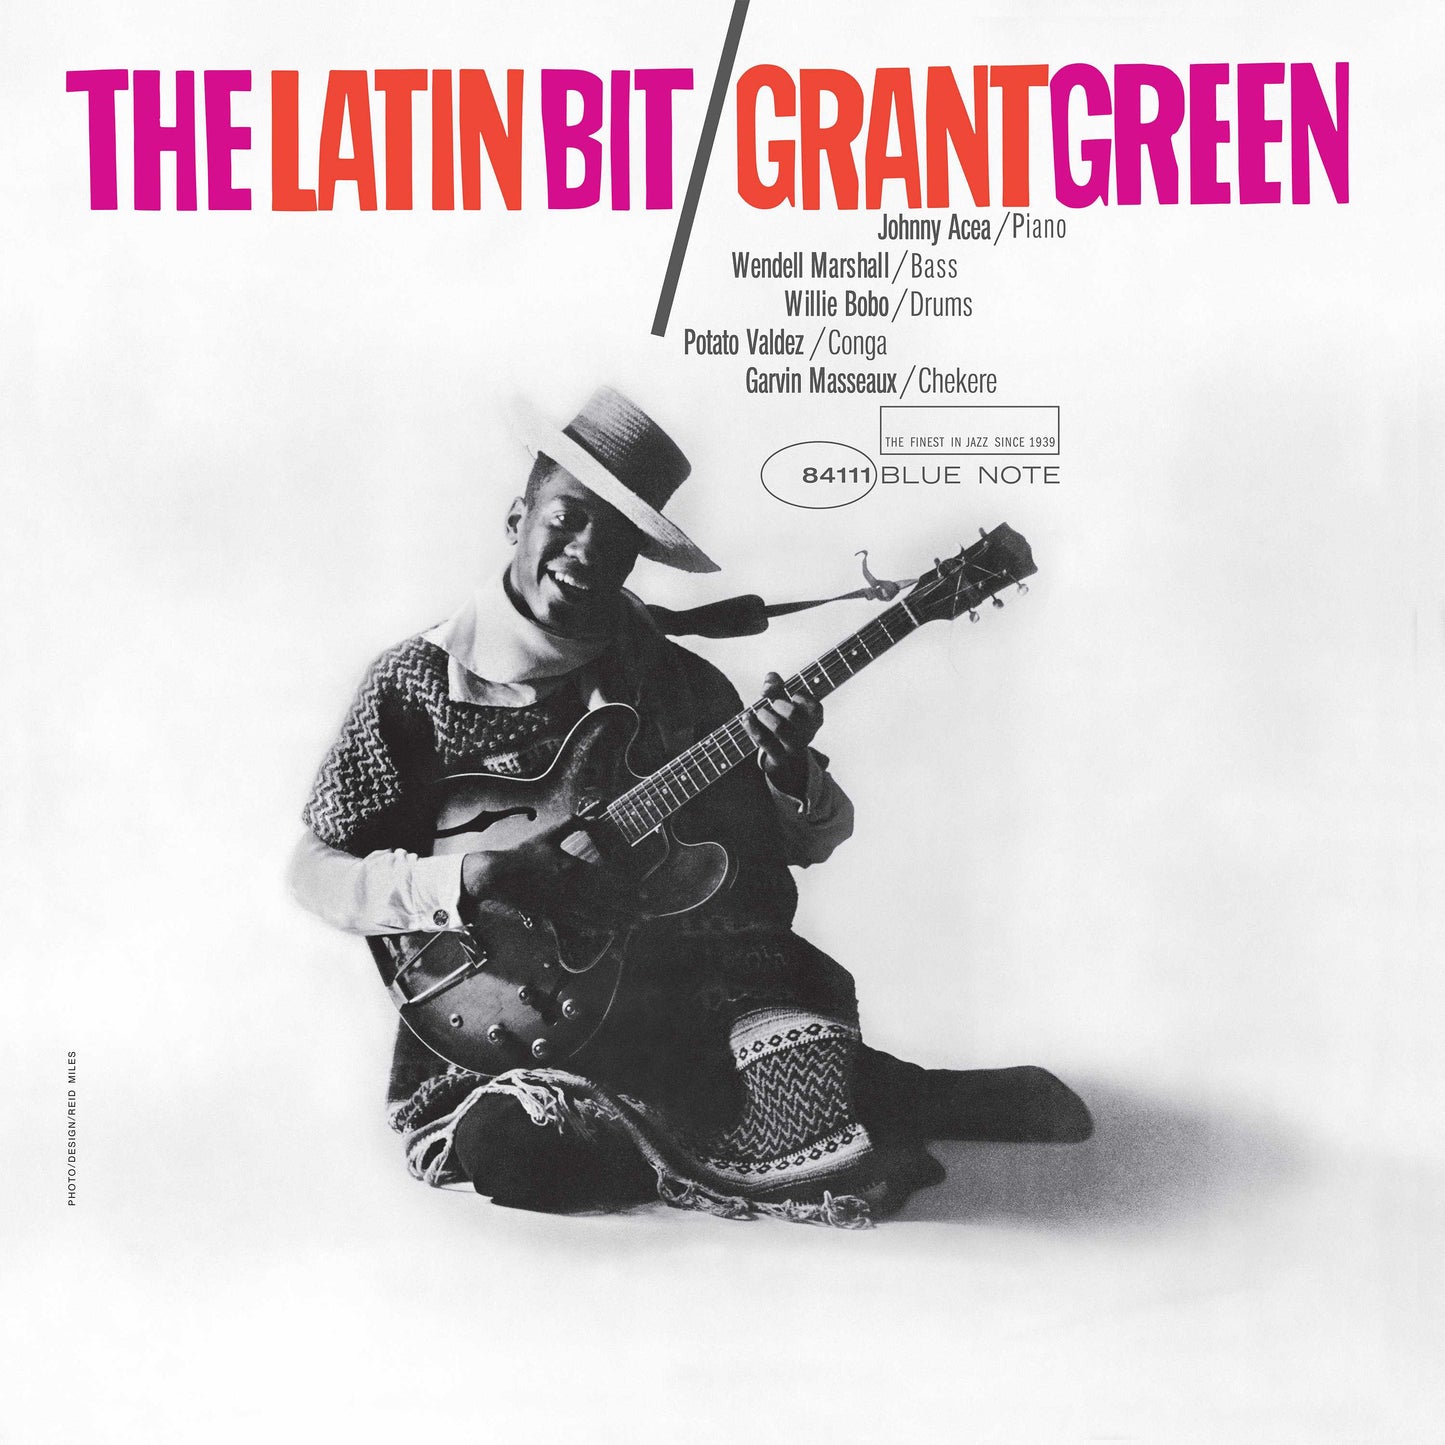 Grant Green - The Latin Bit - Tono Poeta LP